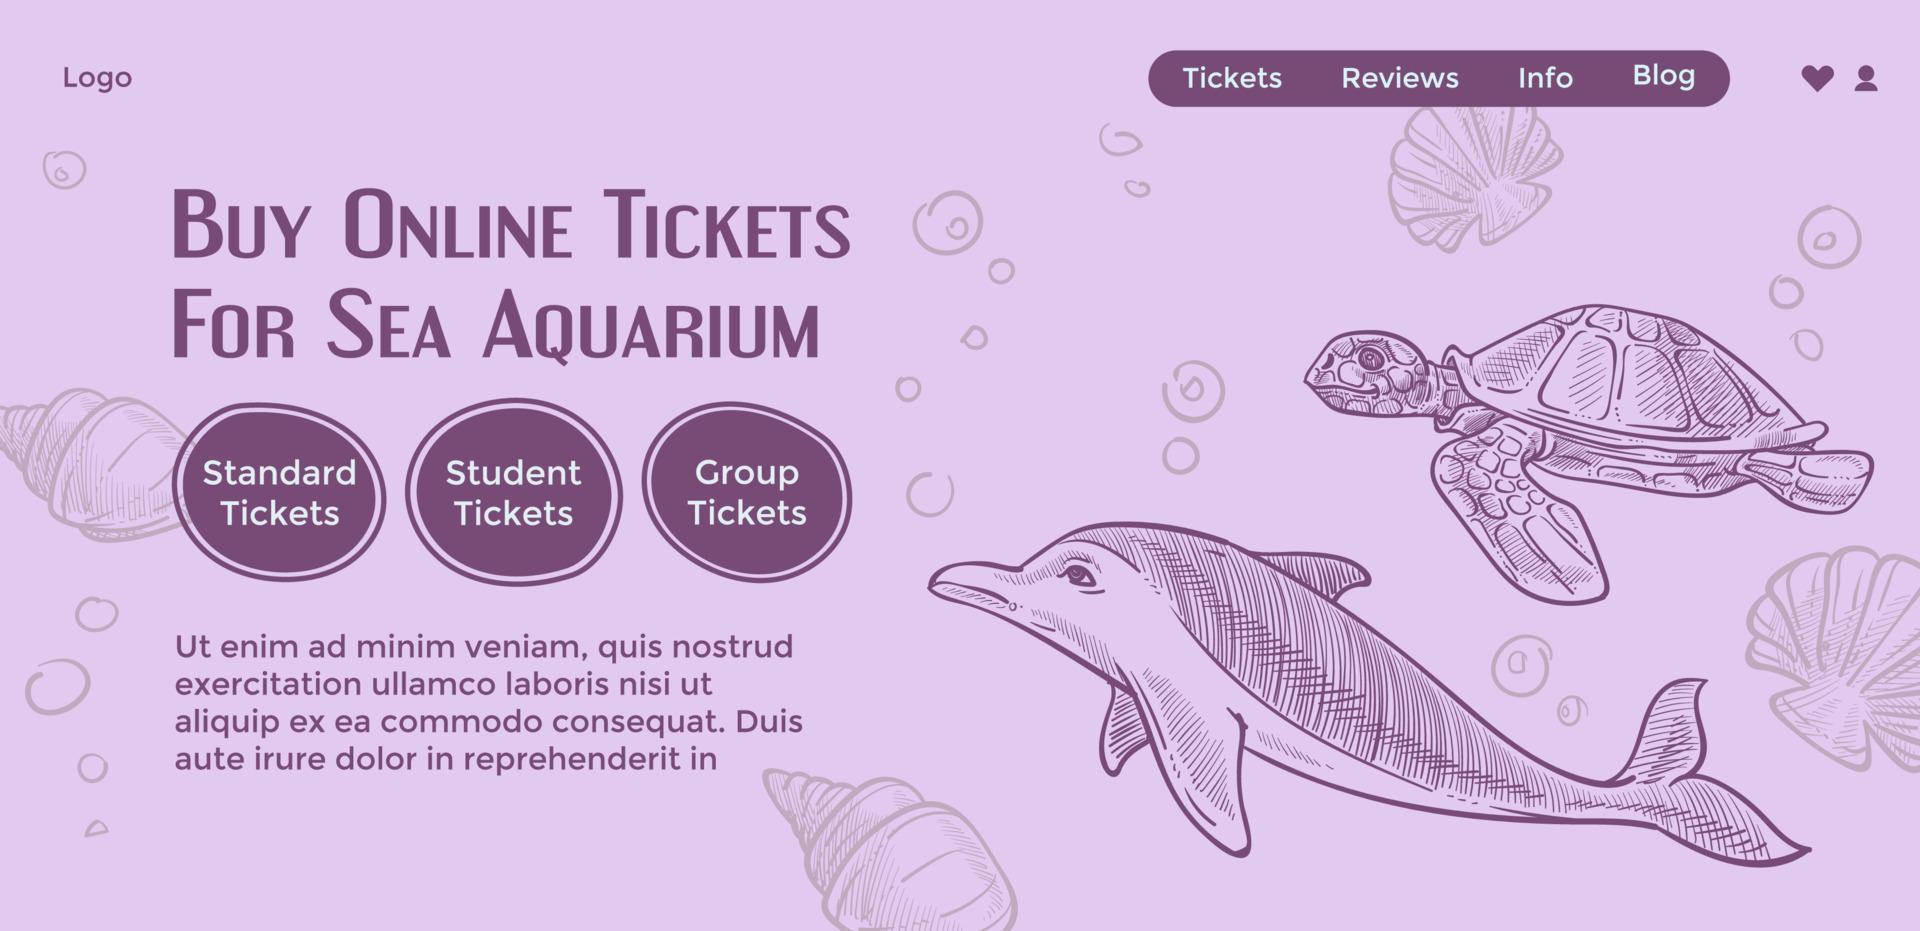 Buy online tickets for sea aquarium, websites vector